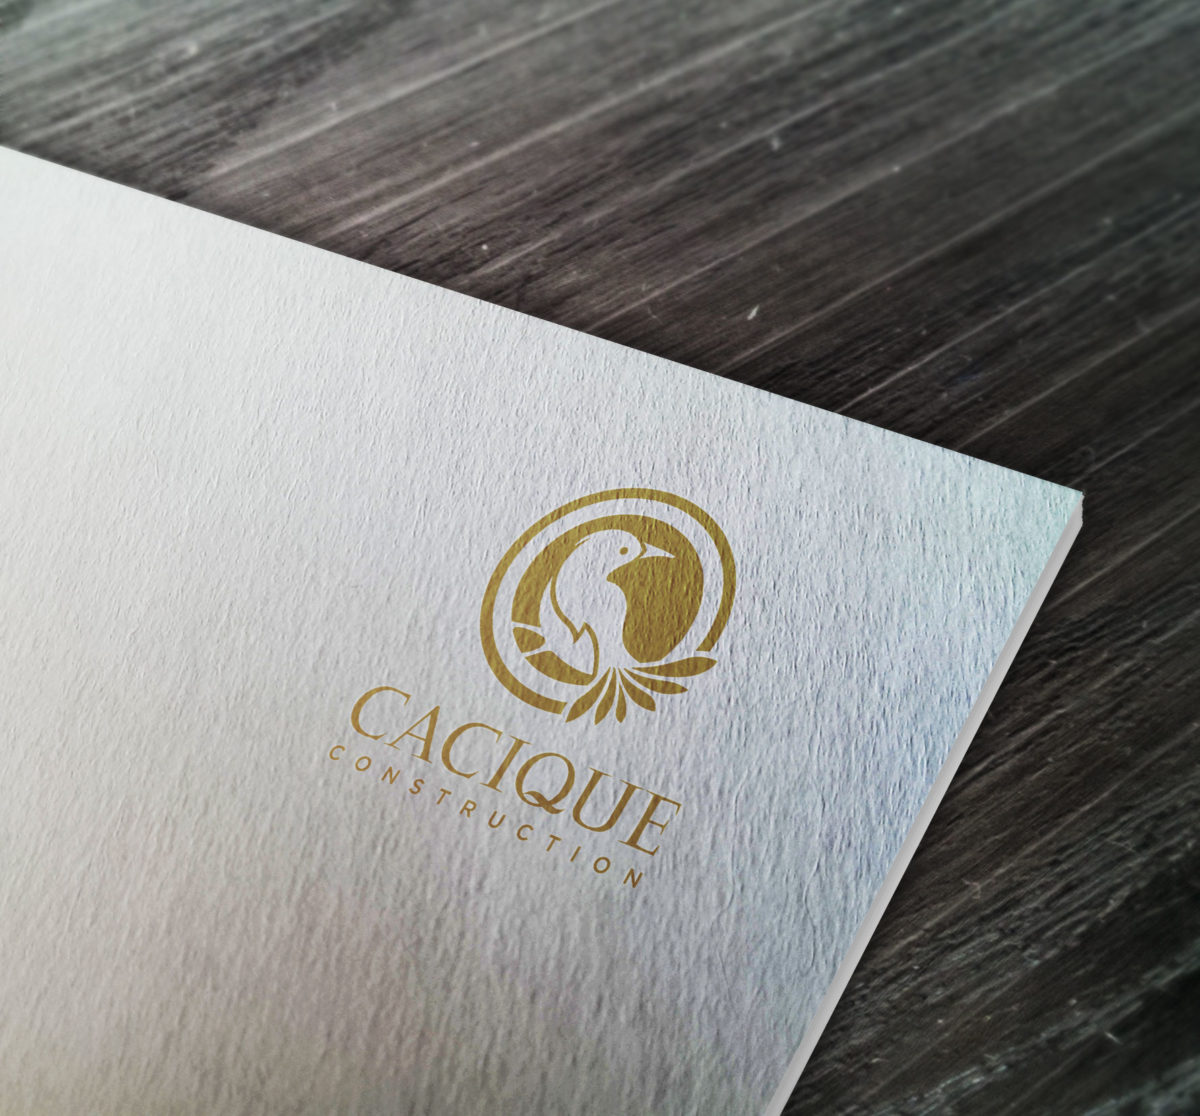 cacique-construction-logo-mark-printing-gold